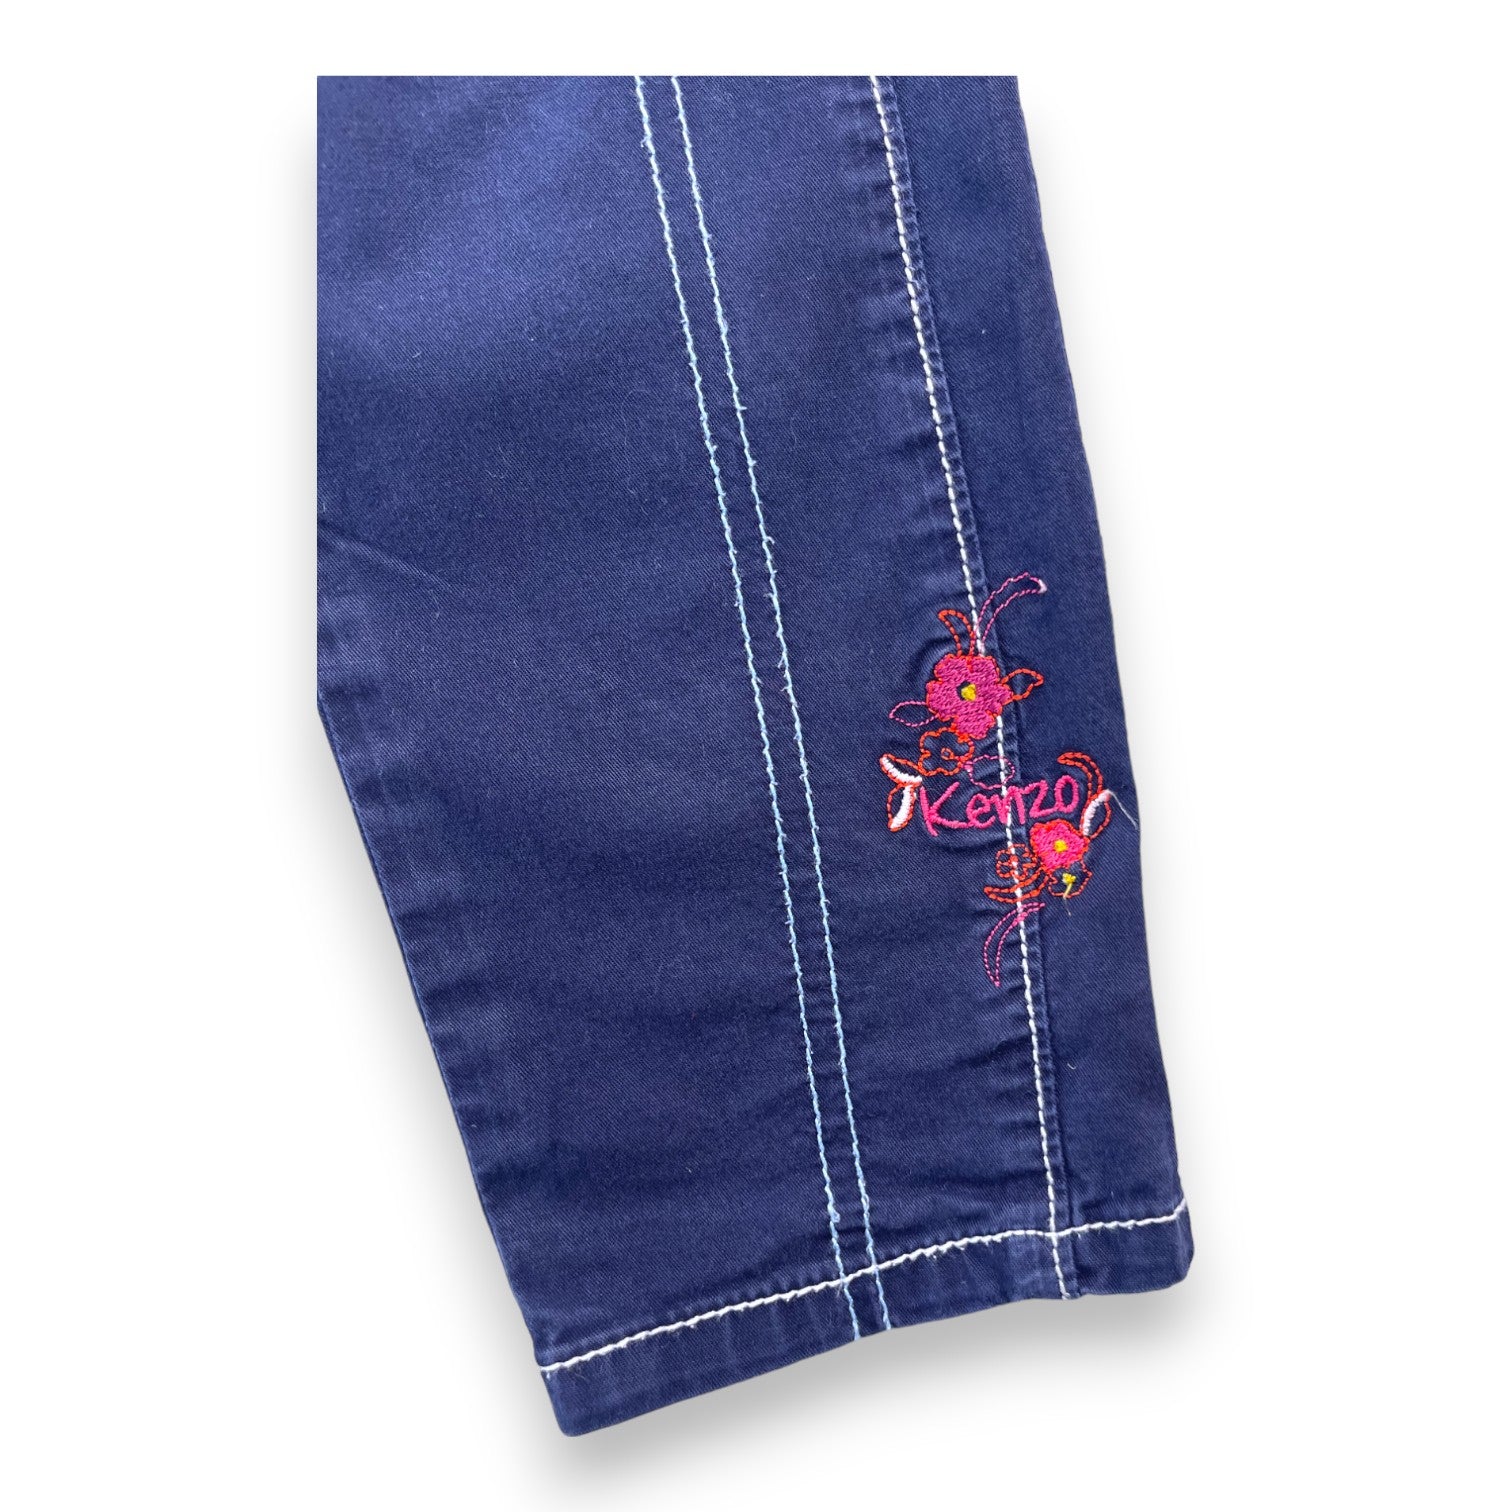 KENZO - Pantalon droit bleu marine coutures apparentes -  2 ans